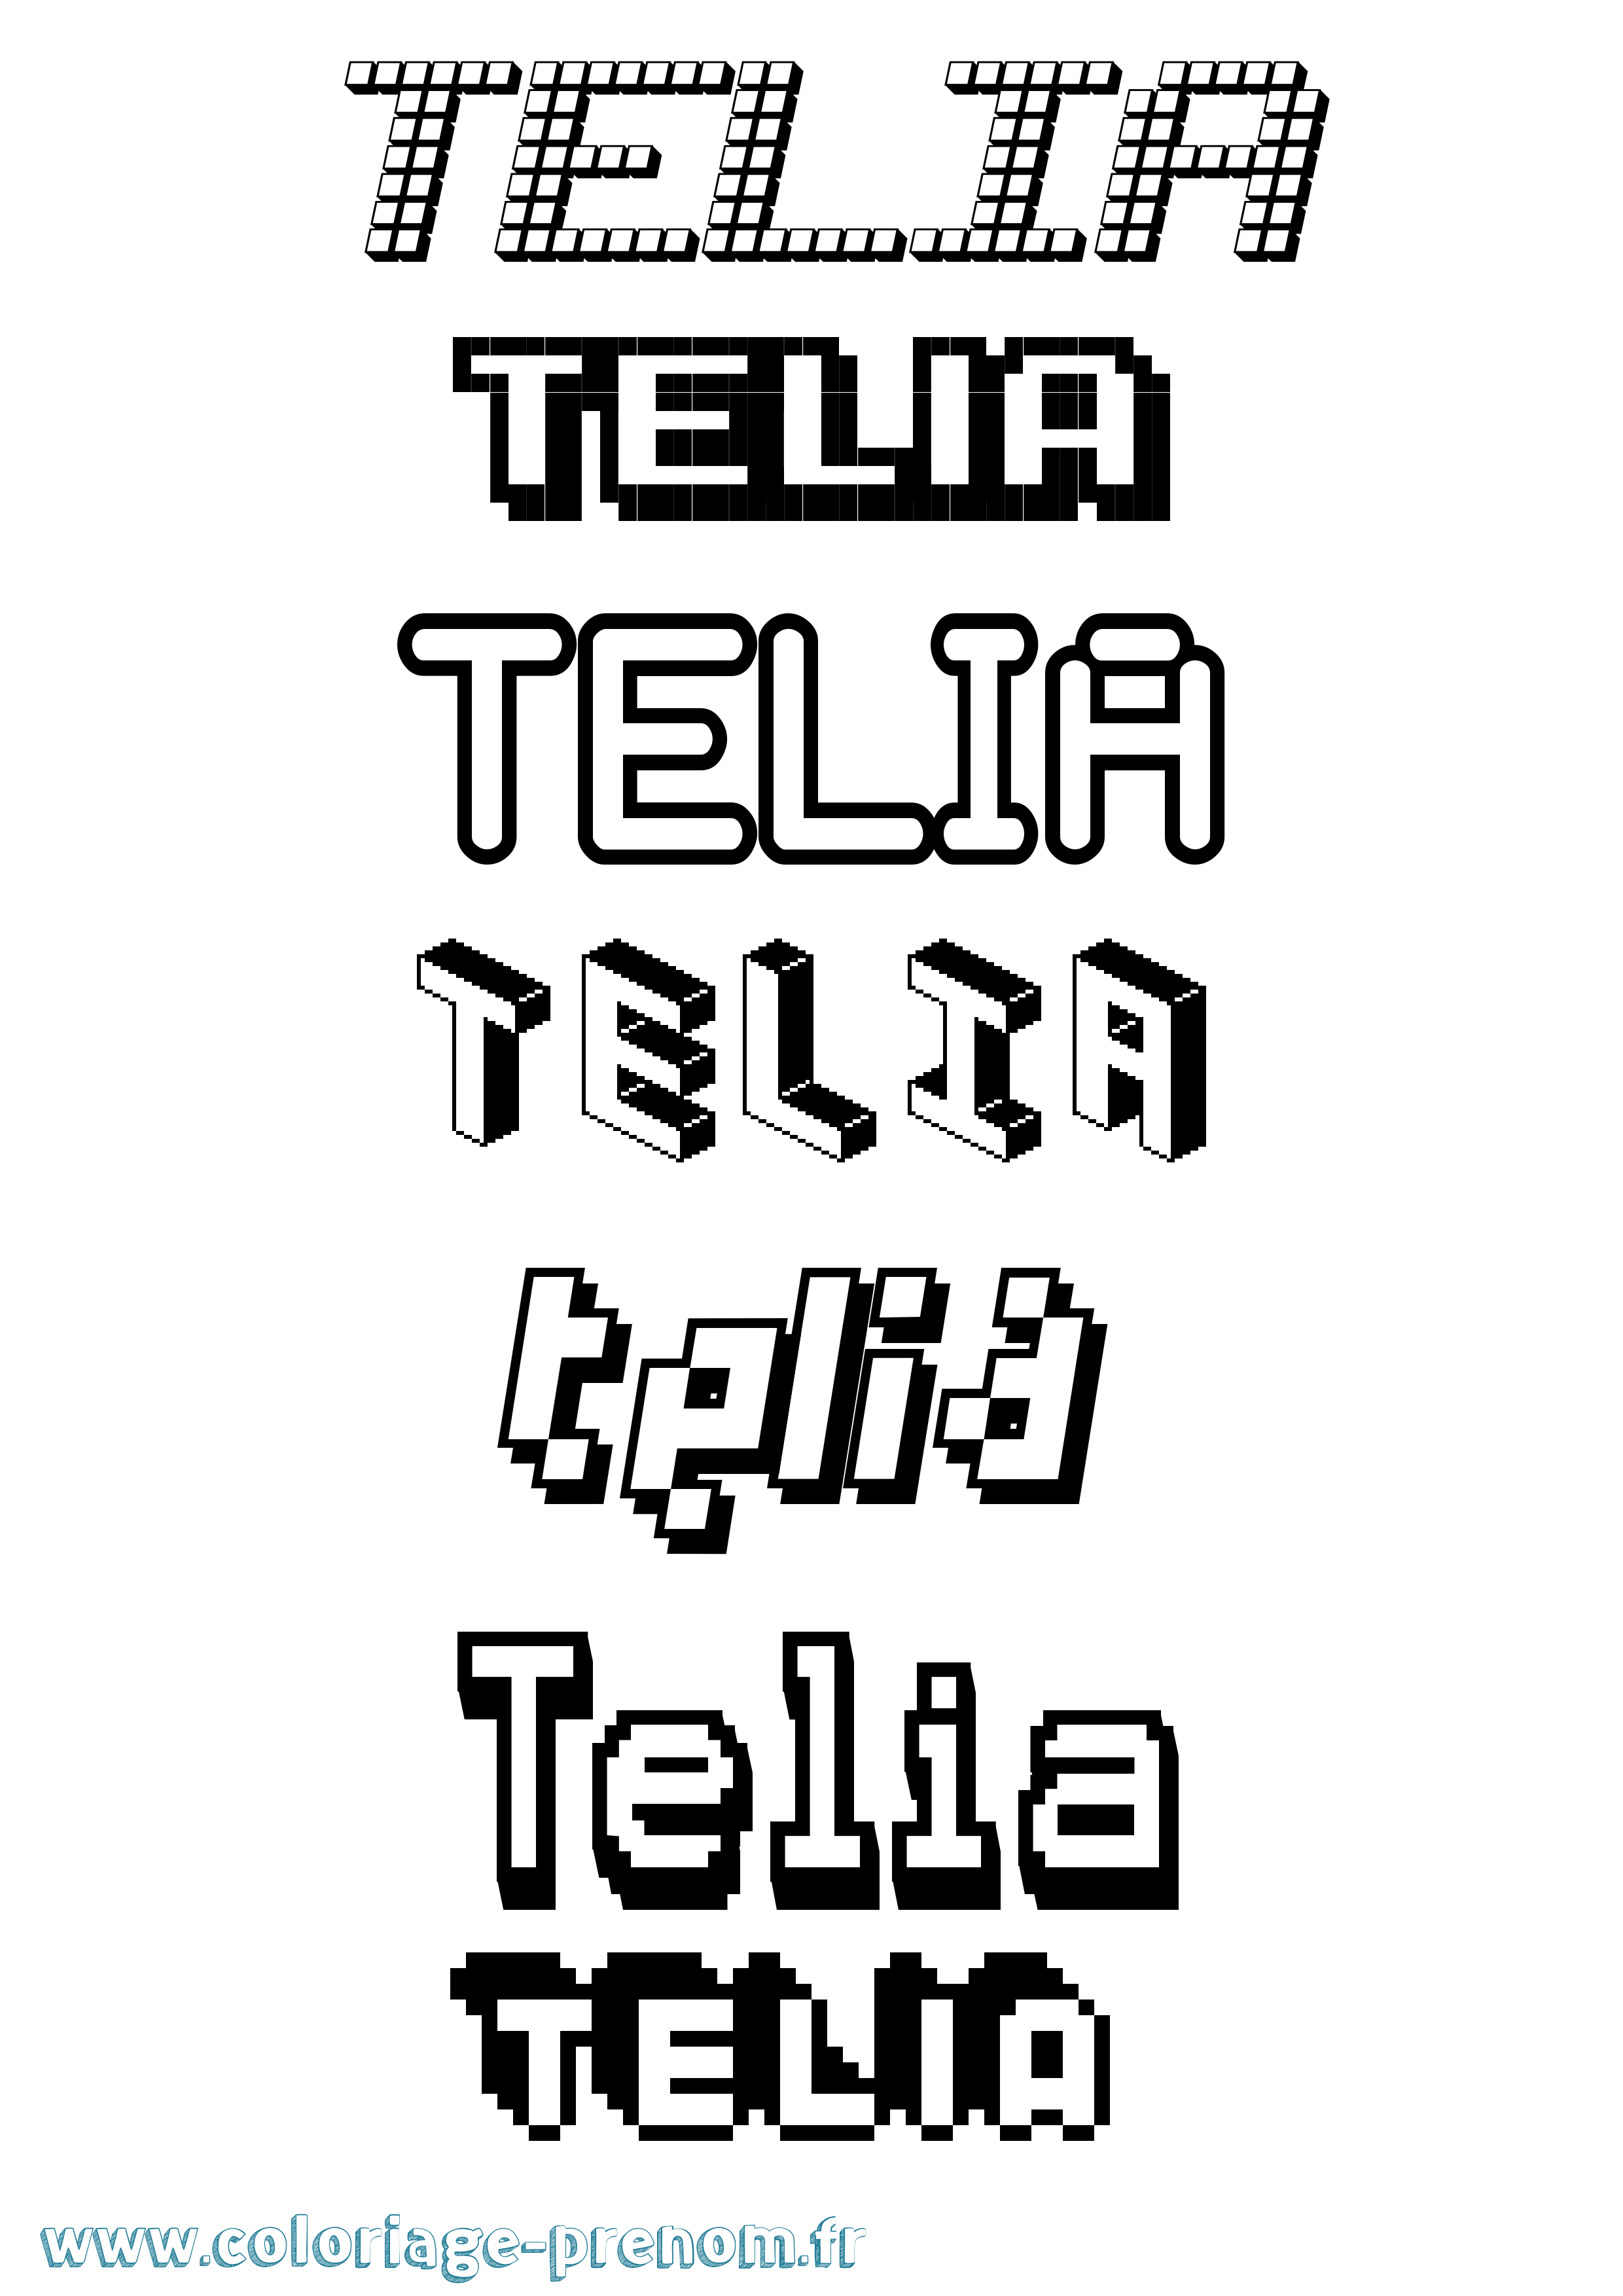 Coloriage prénom Telia Pixel